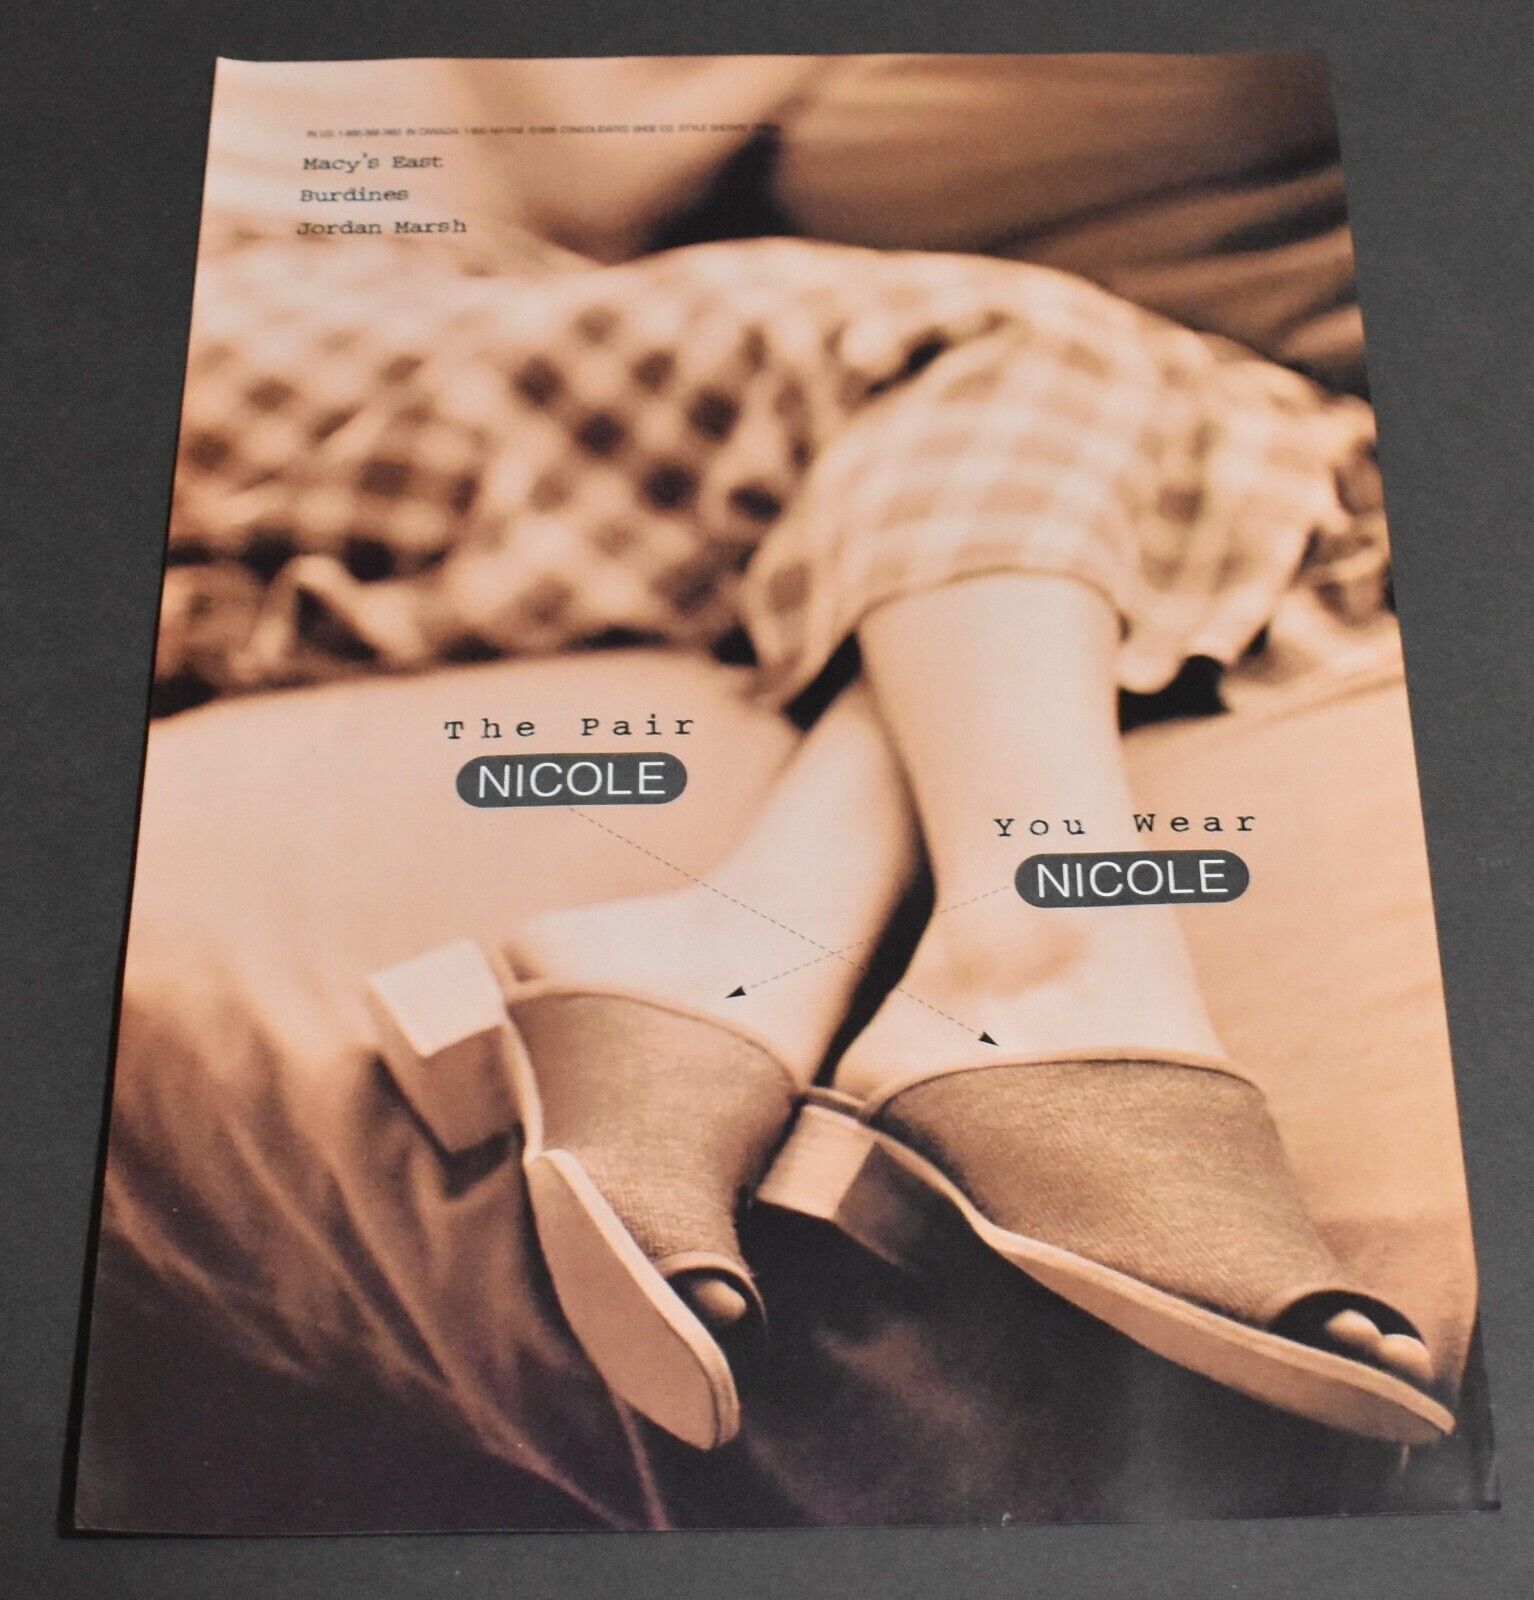 1997 Print Ad Sexy Heels Long Legs Lady Nicole Jordan Marsh Fashion Style art